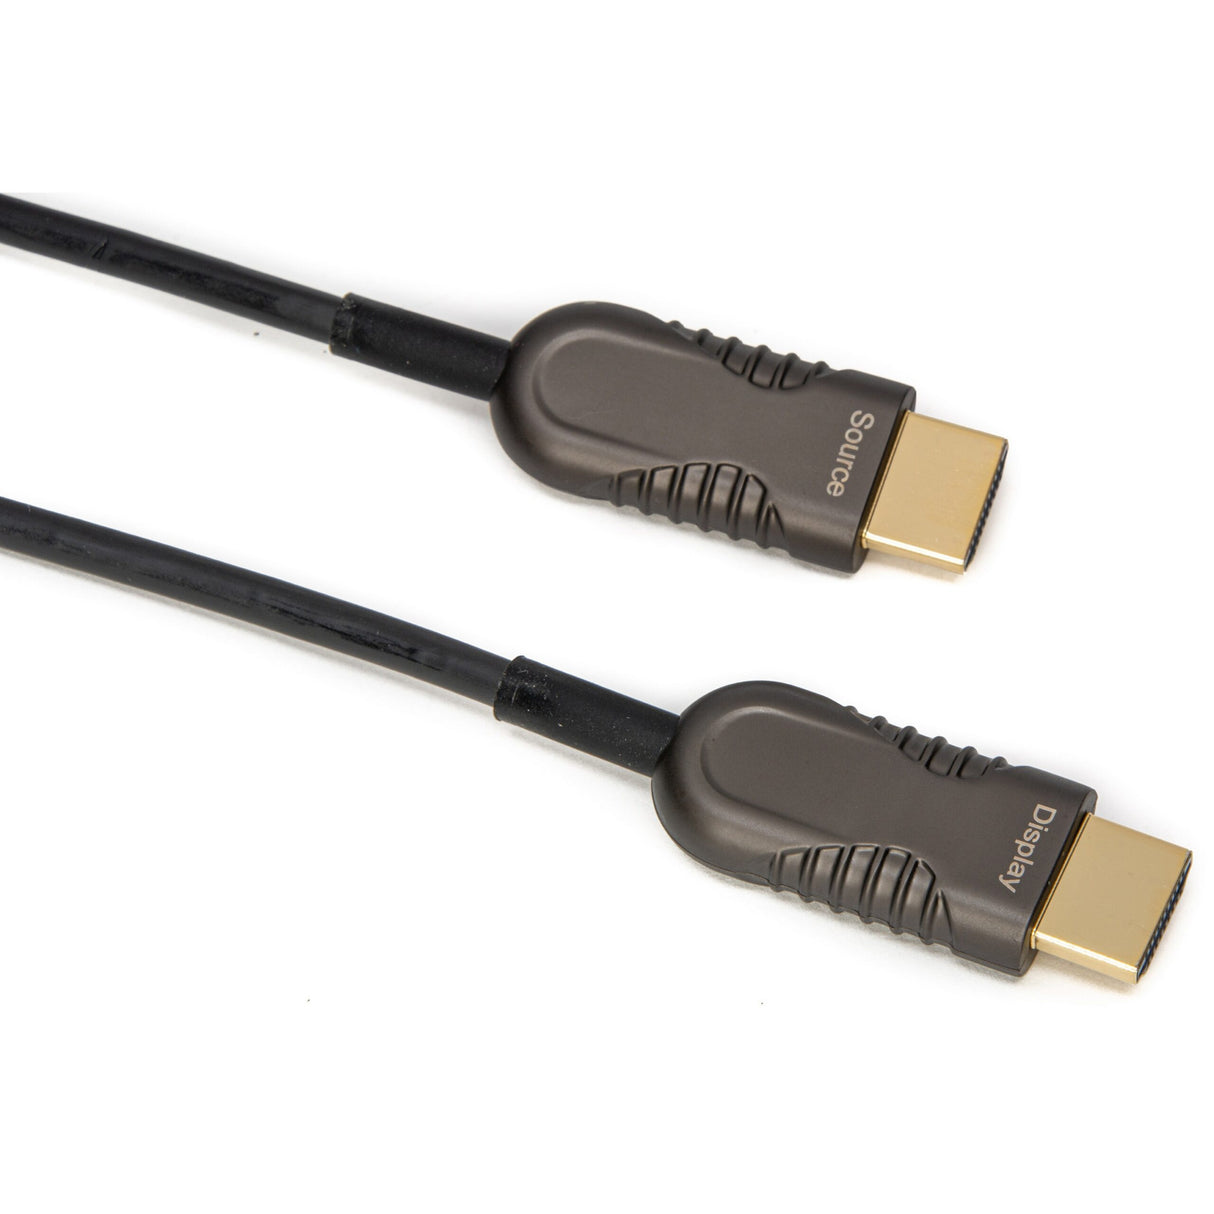 Connectronics AOC-HDMI-030 18Gbps Active Optical Fiber 4K UltraHD HDMI Cable, 30 Meter